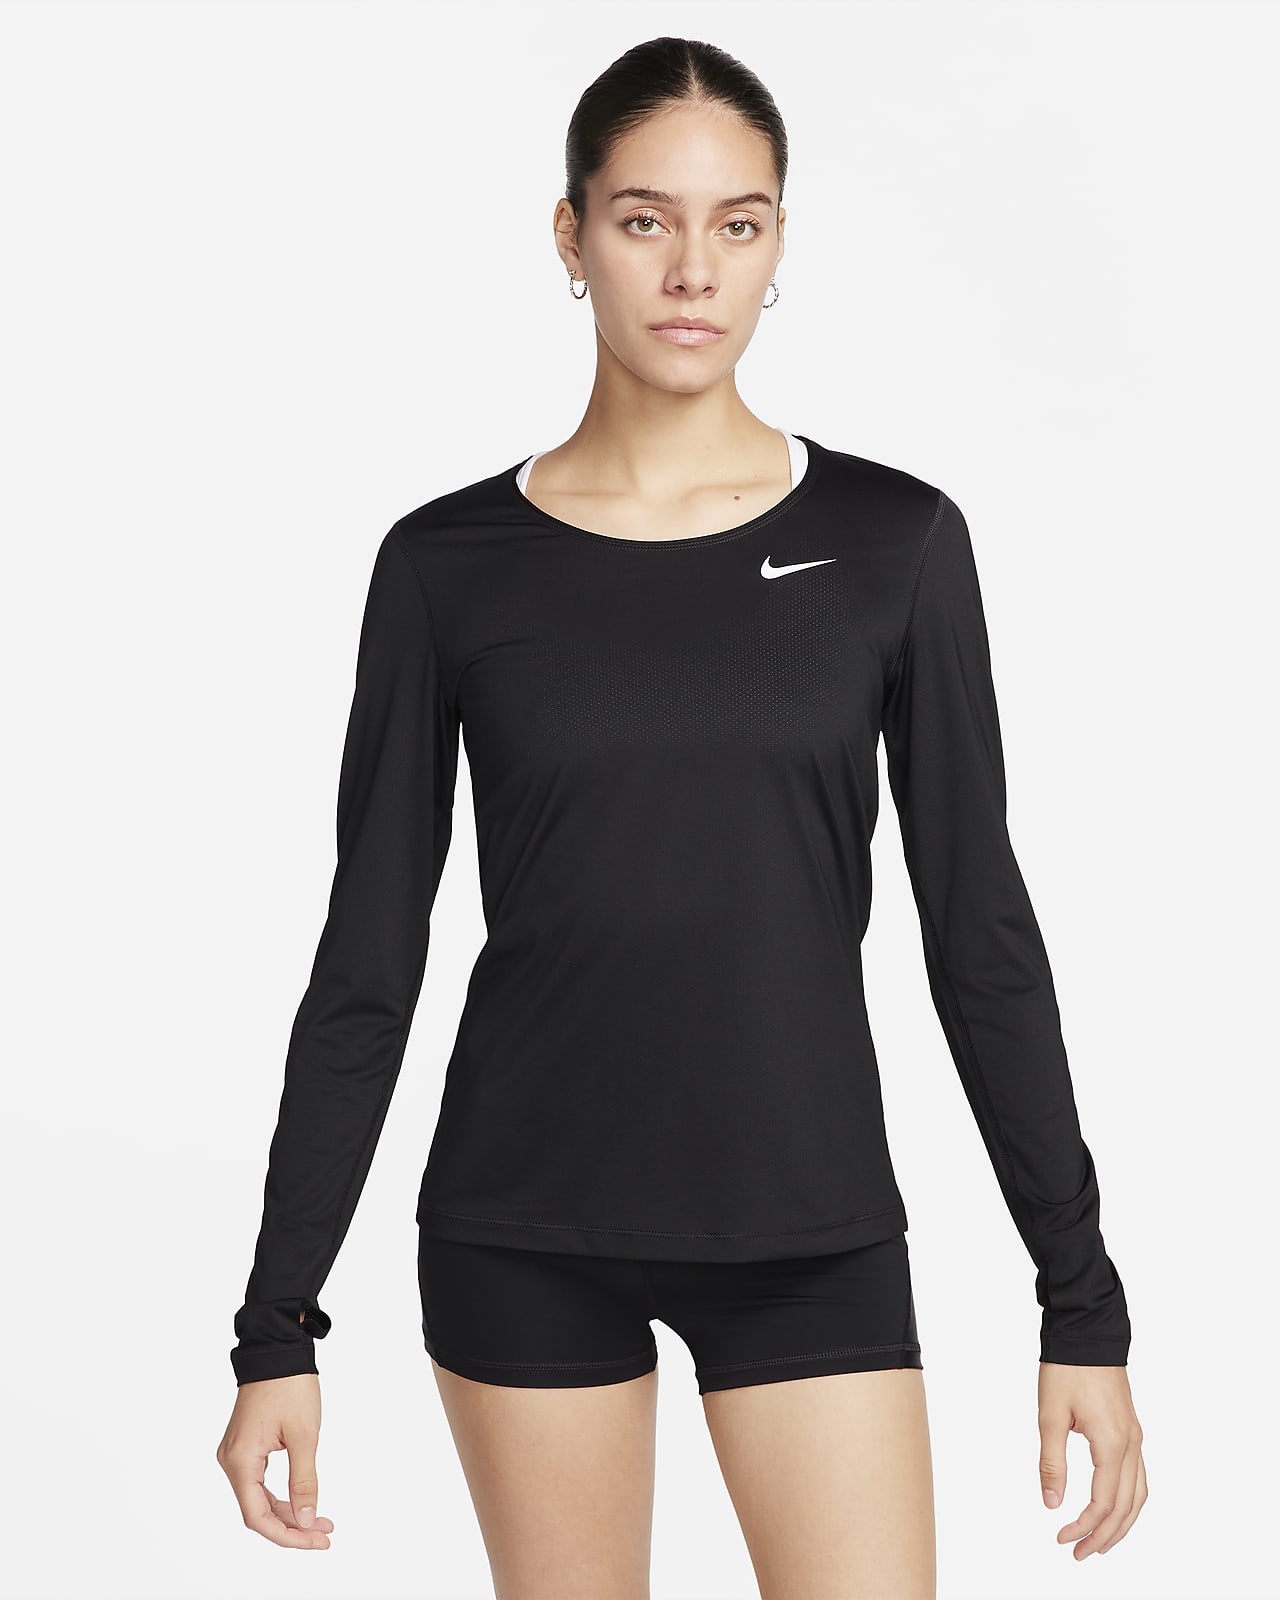 NWT Nike Pro Warm Sparkle Long Sleeve Women's Size Large AO9226-258 BEIGE